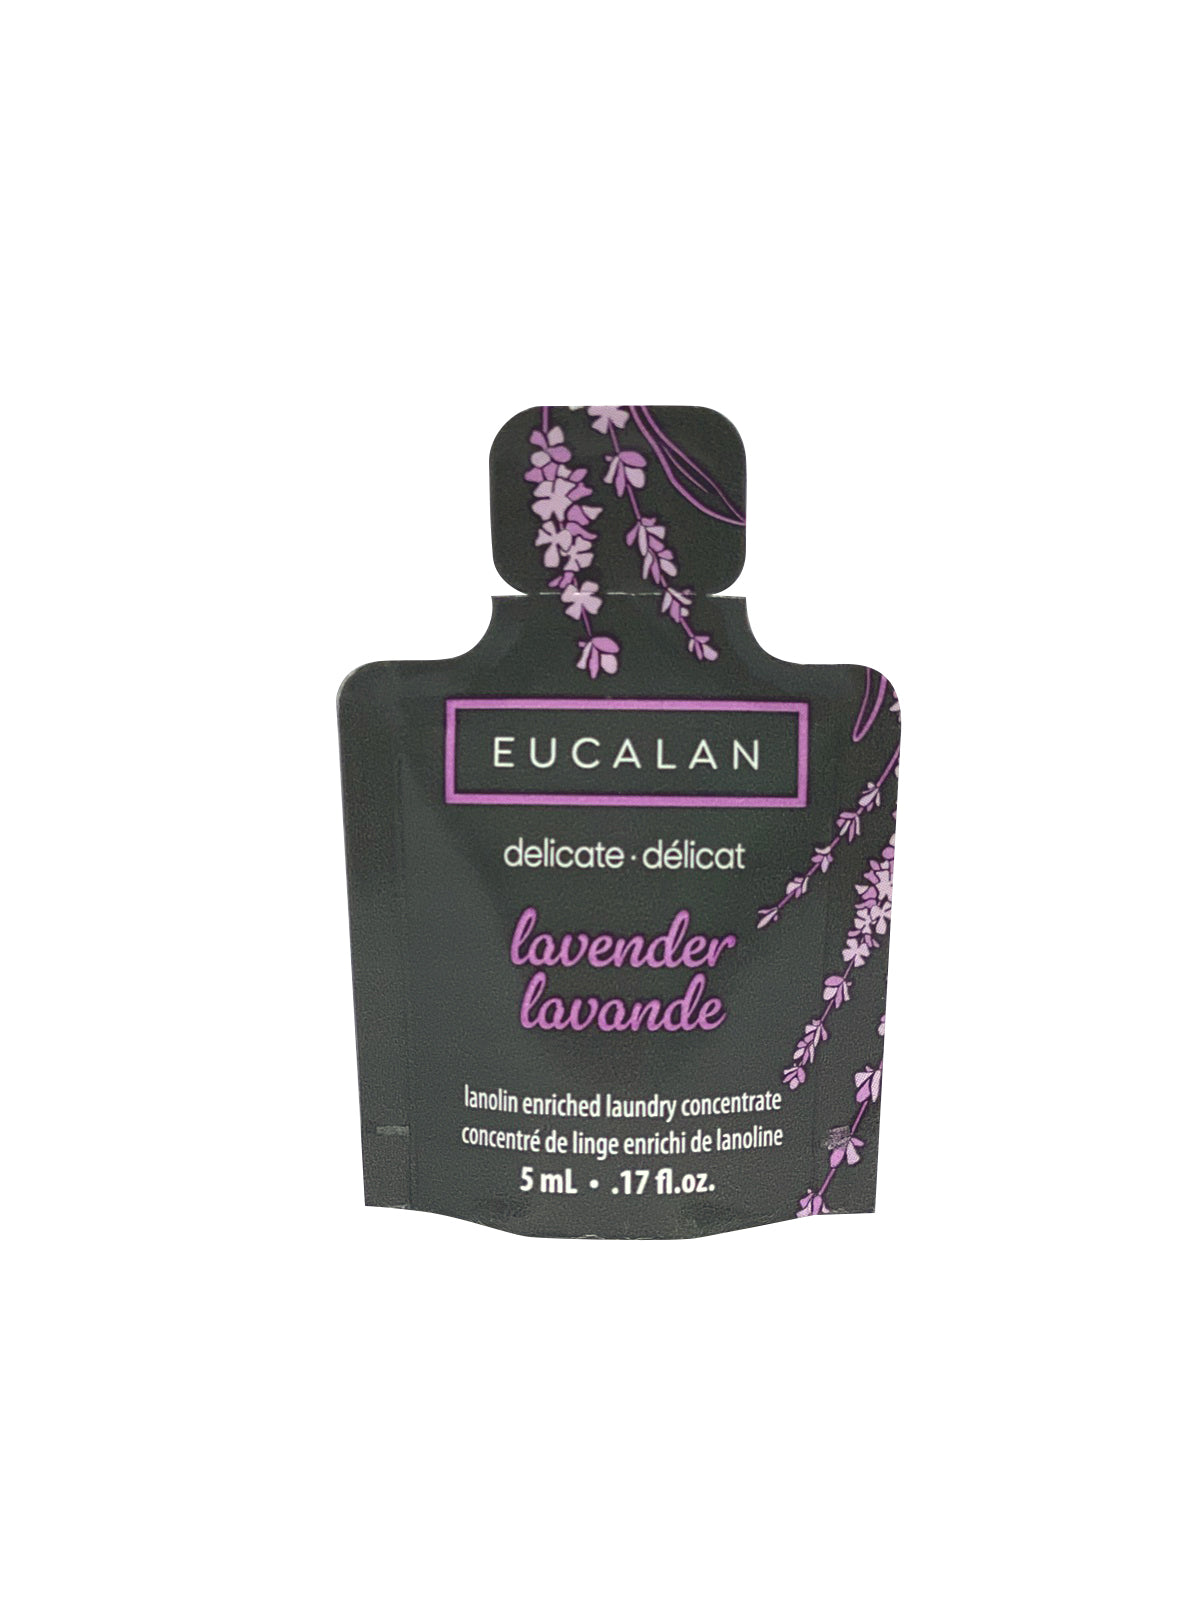 single use Lavender packet of Eucalan